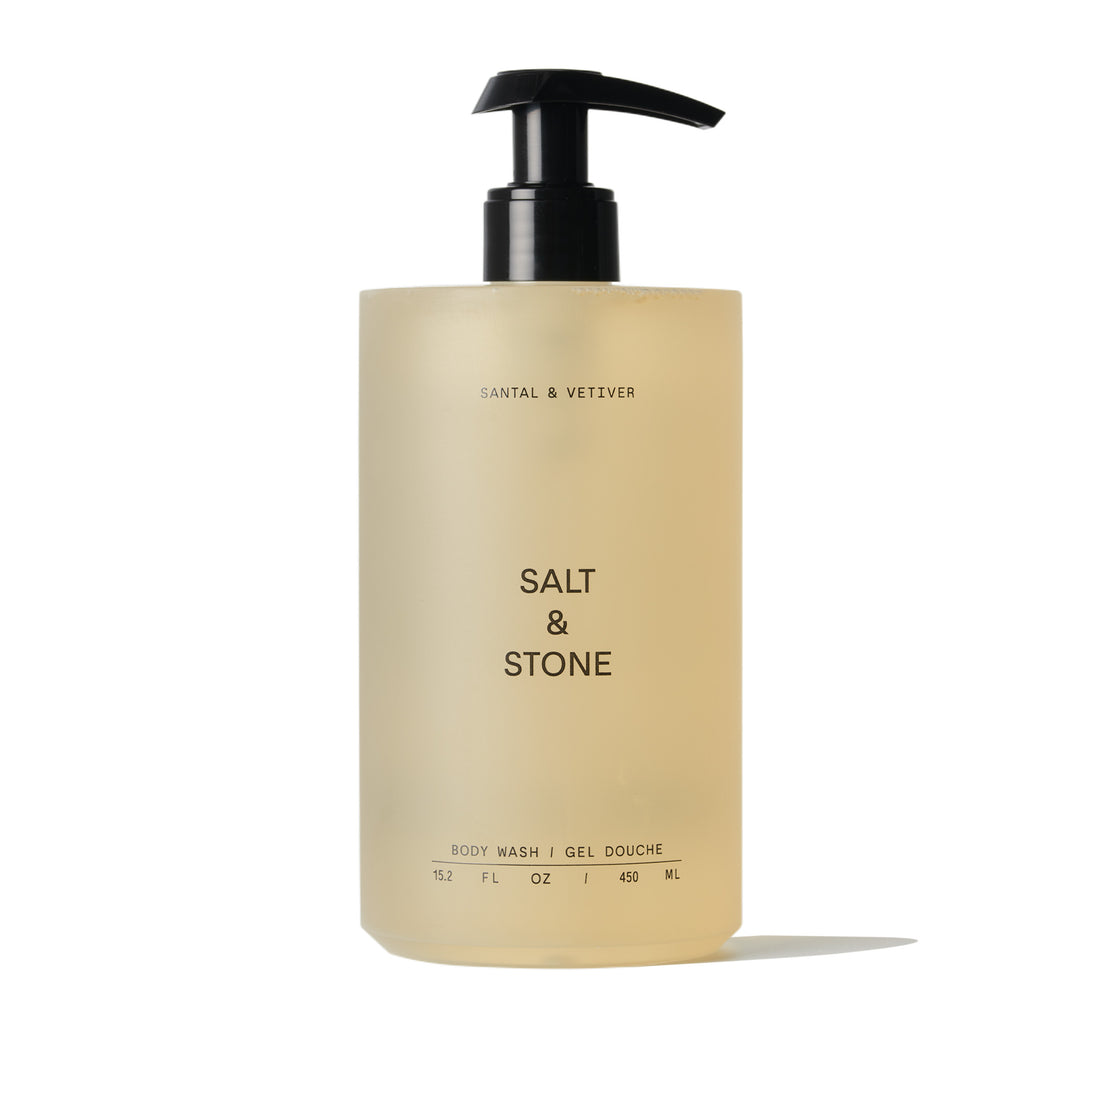 Salt & Stone Santal & Vetiver Body Wash 450 ml